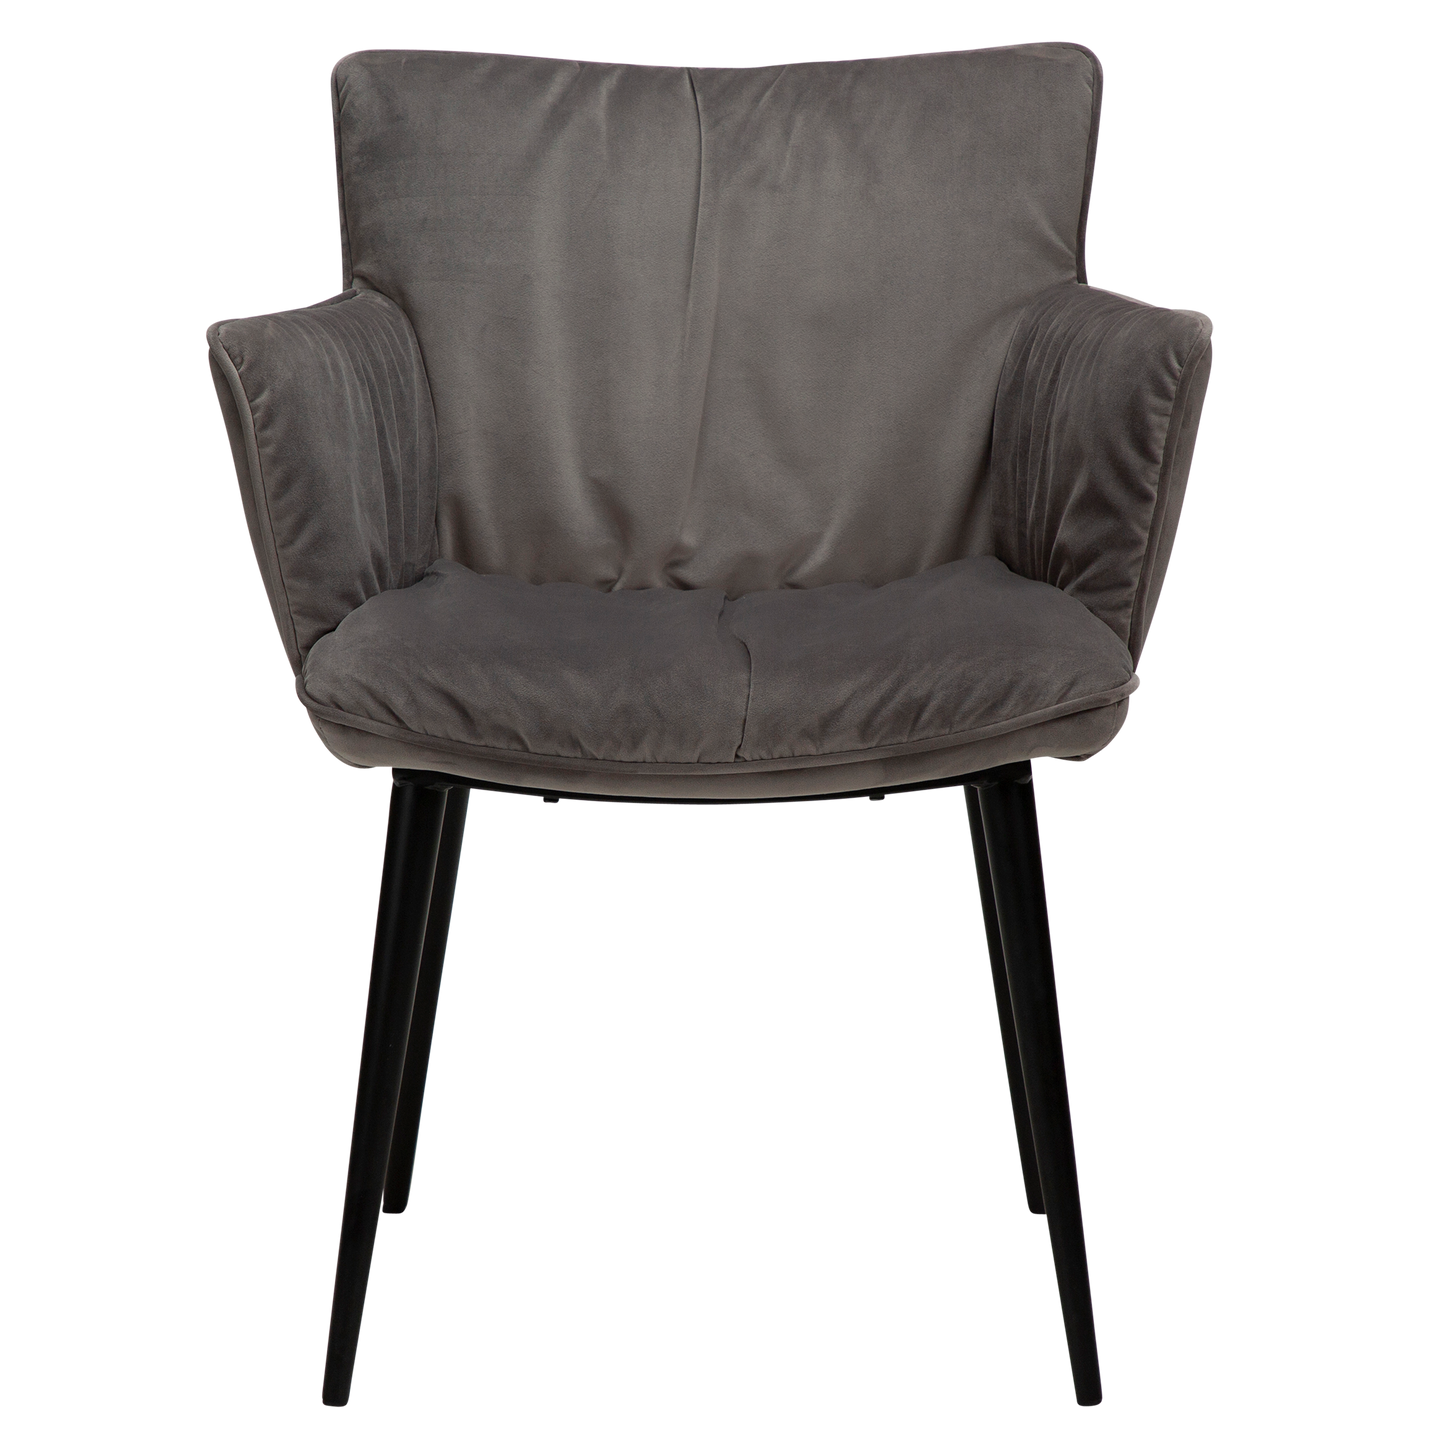 1 stk. JOIN Lænestol, grå fløjl stof, sorte metal ben.